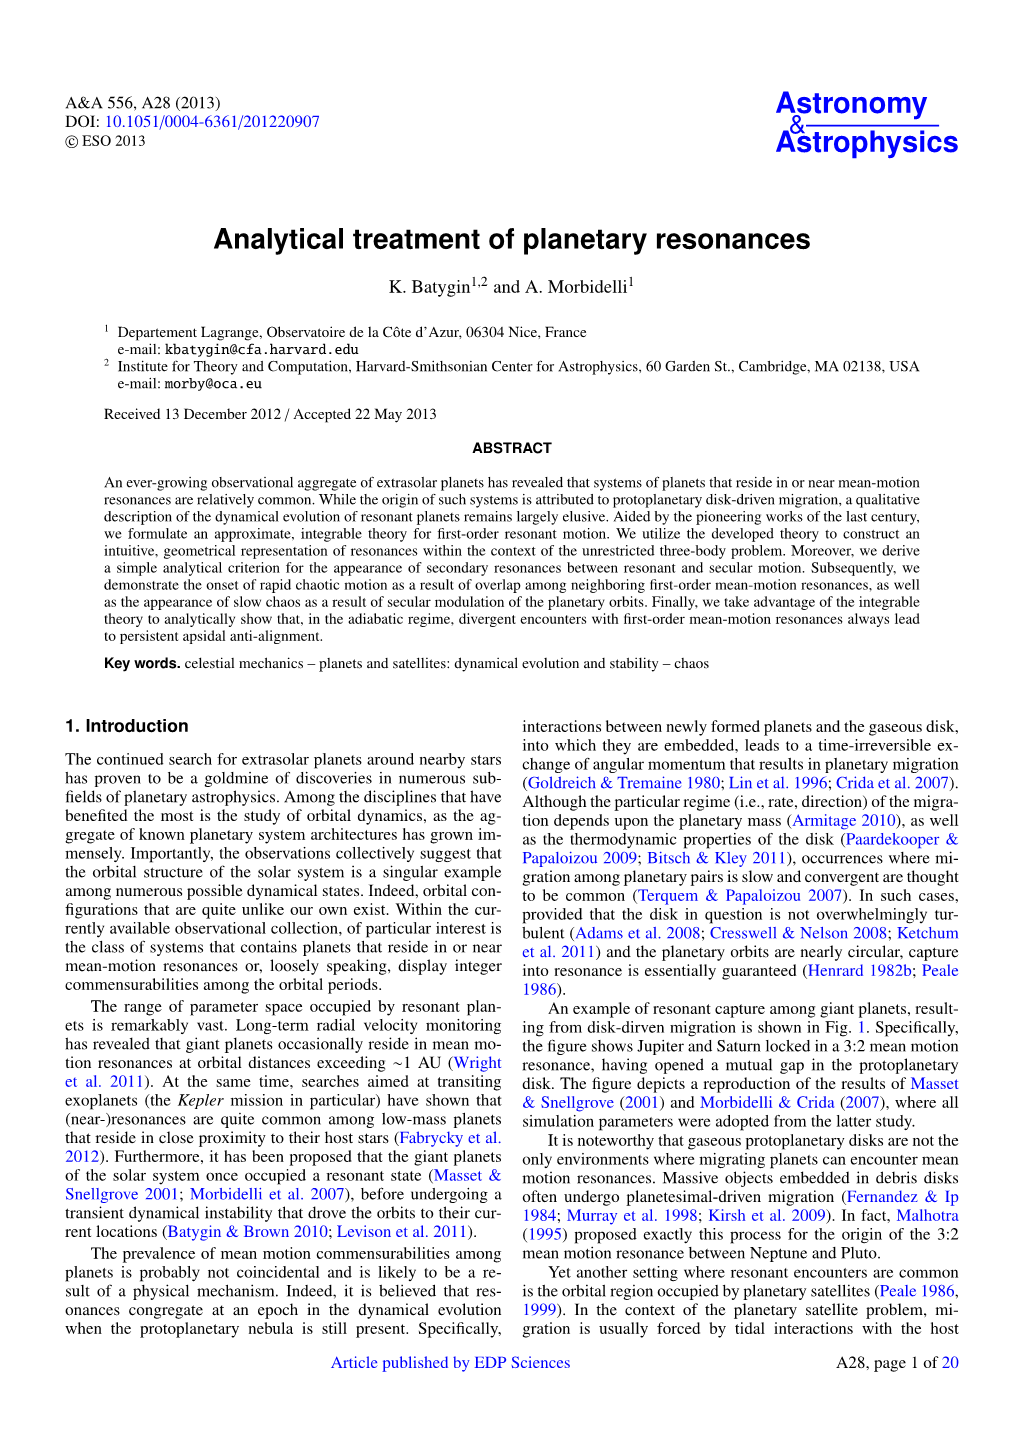 Analytical Treatment of Planetary Resonances